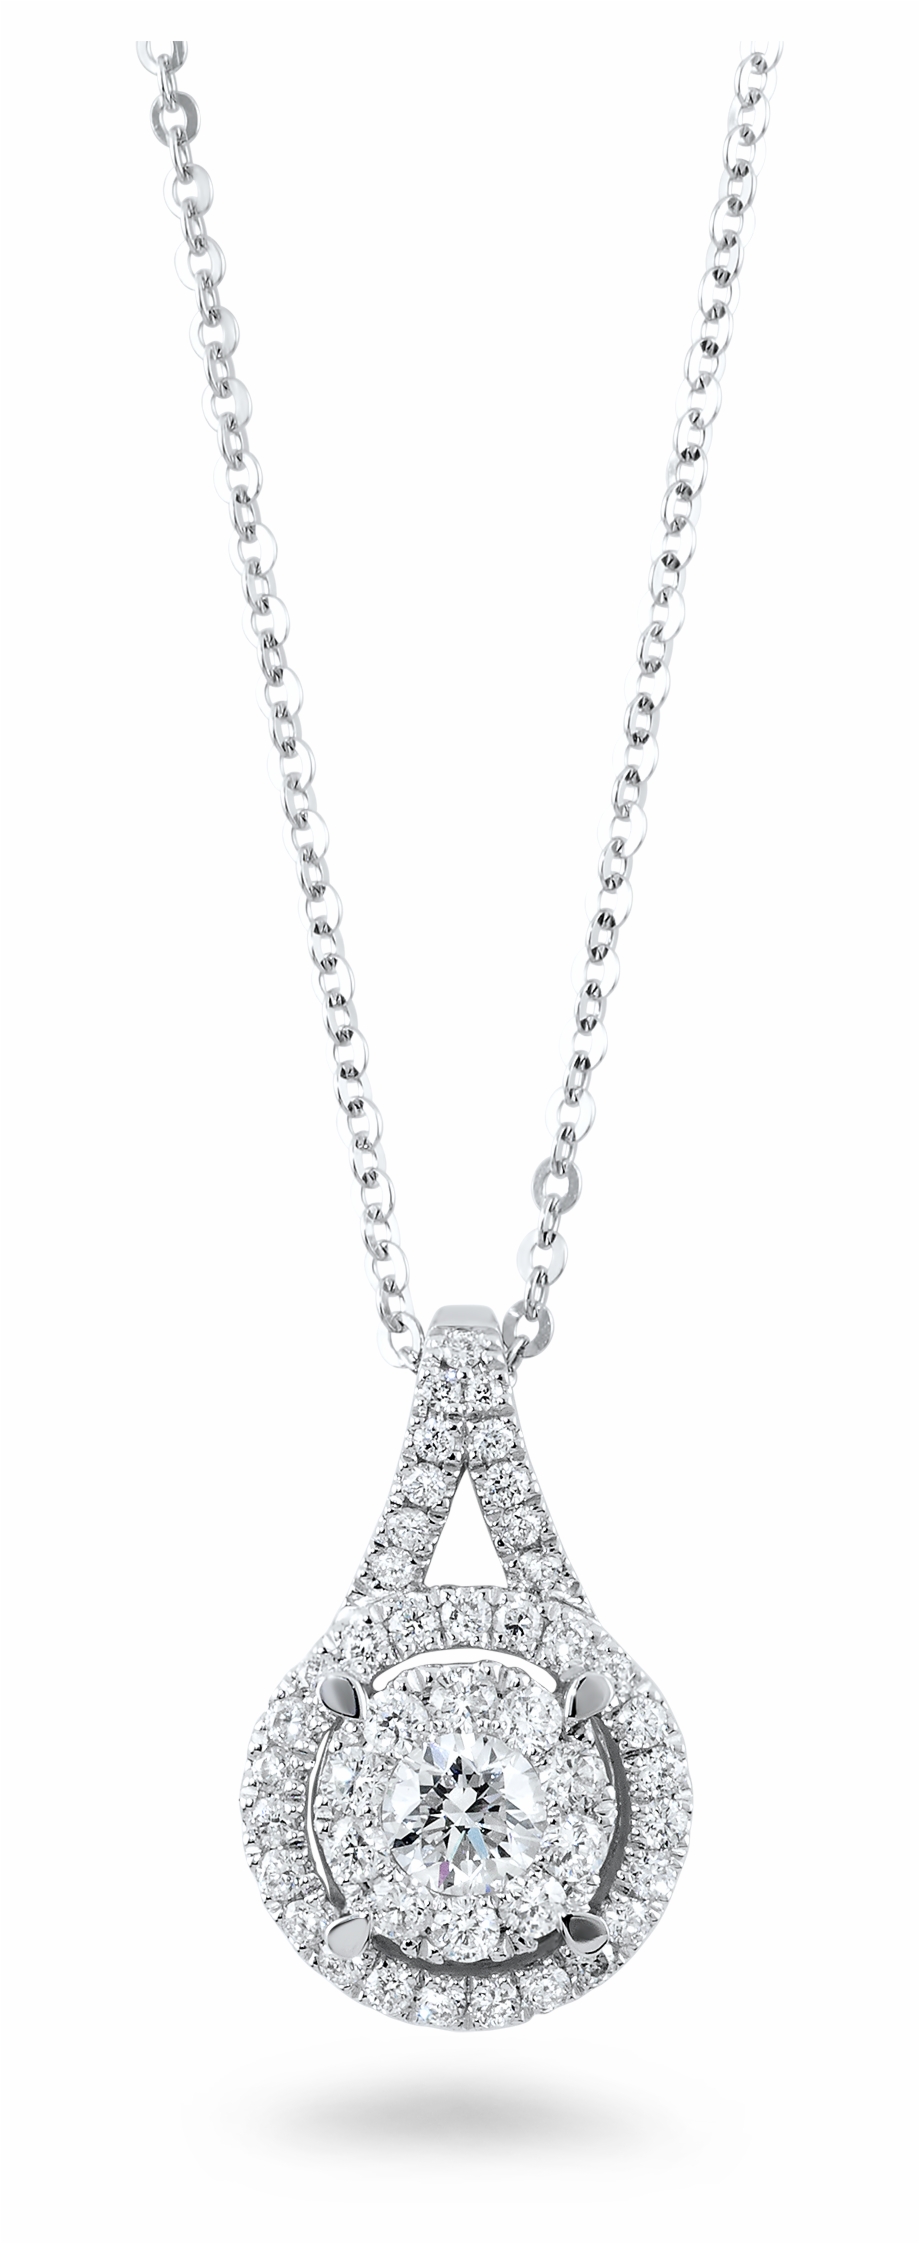 Truly Beautiful Diamond Necklace Locket